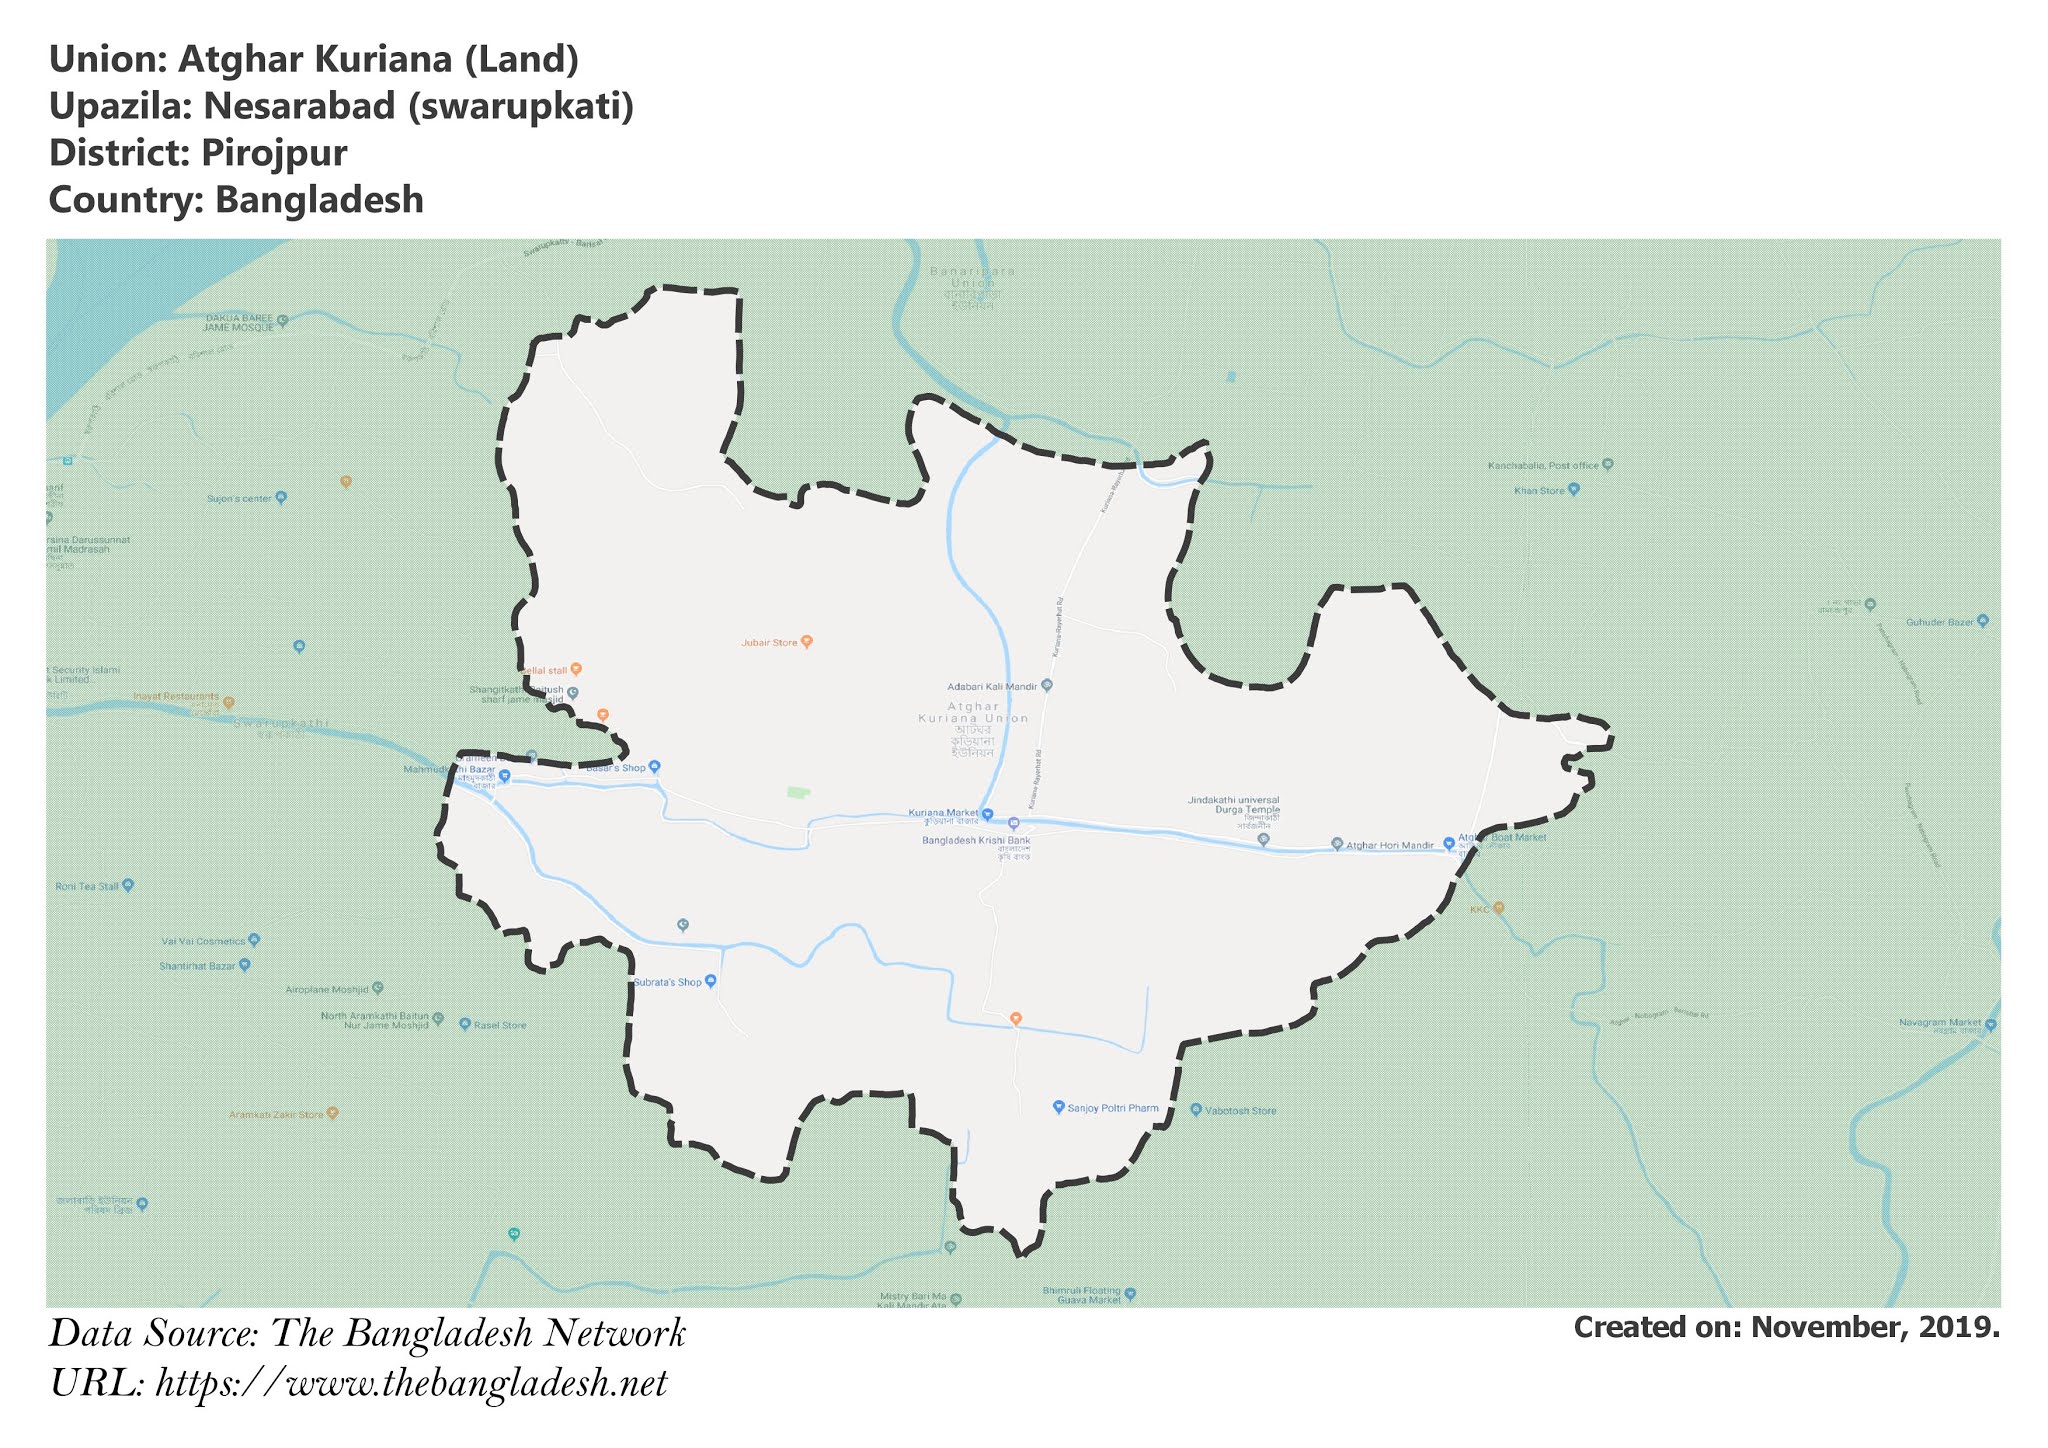 Map of Atghar Kuriana of Pirojpur, Bangladesh.